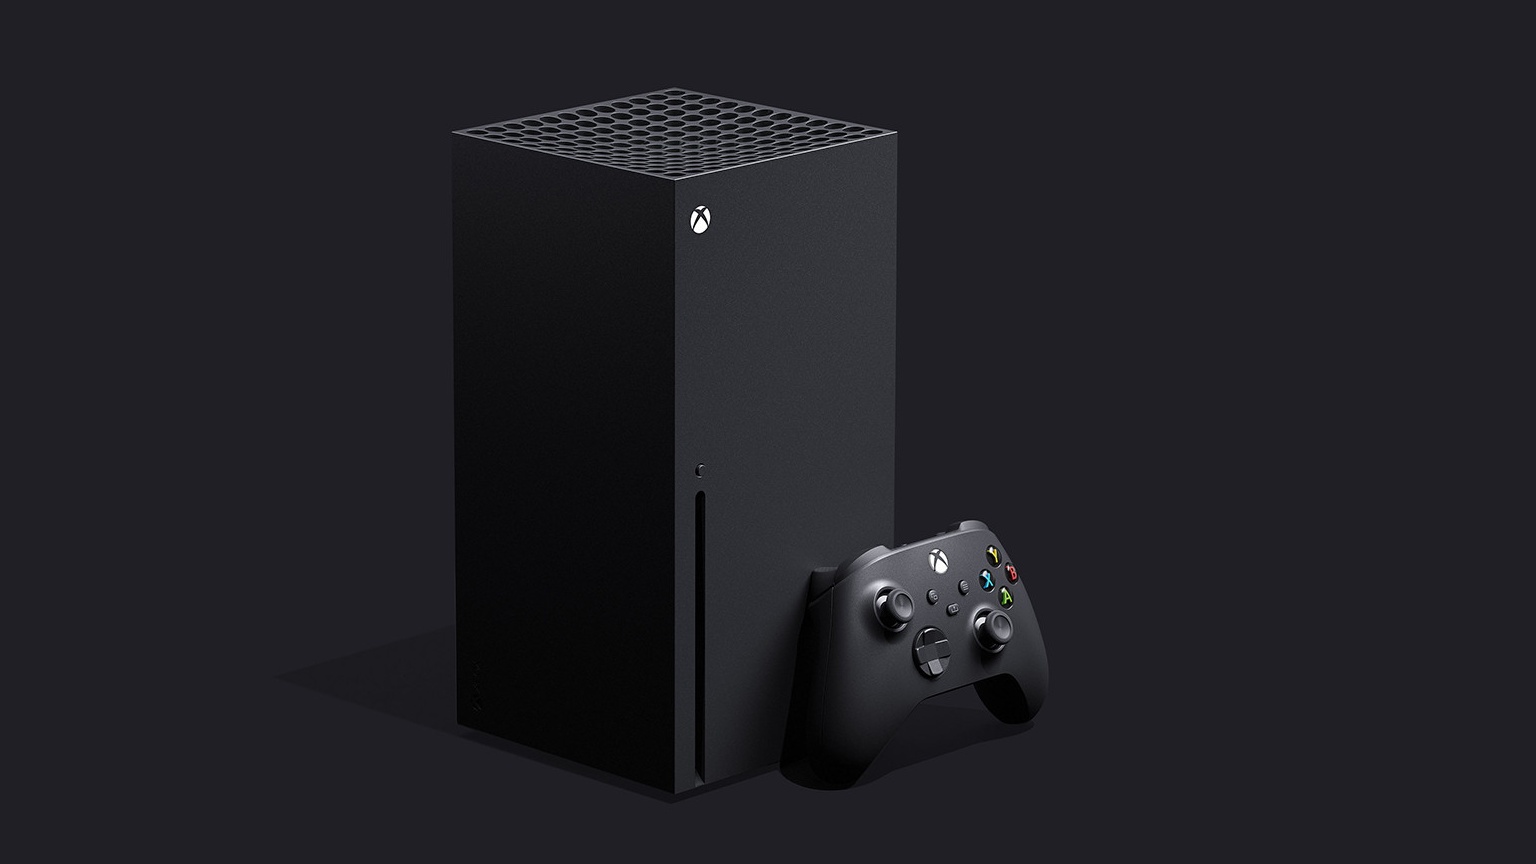 Xbox leak suggests 'Dishonored 3' and new 'Doom' game